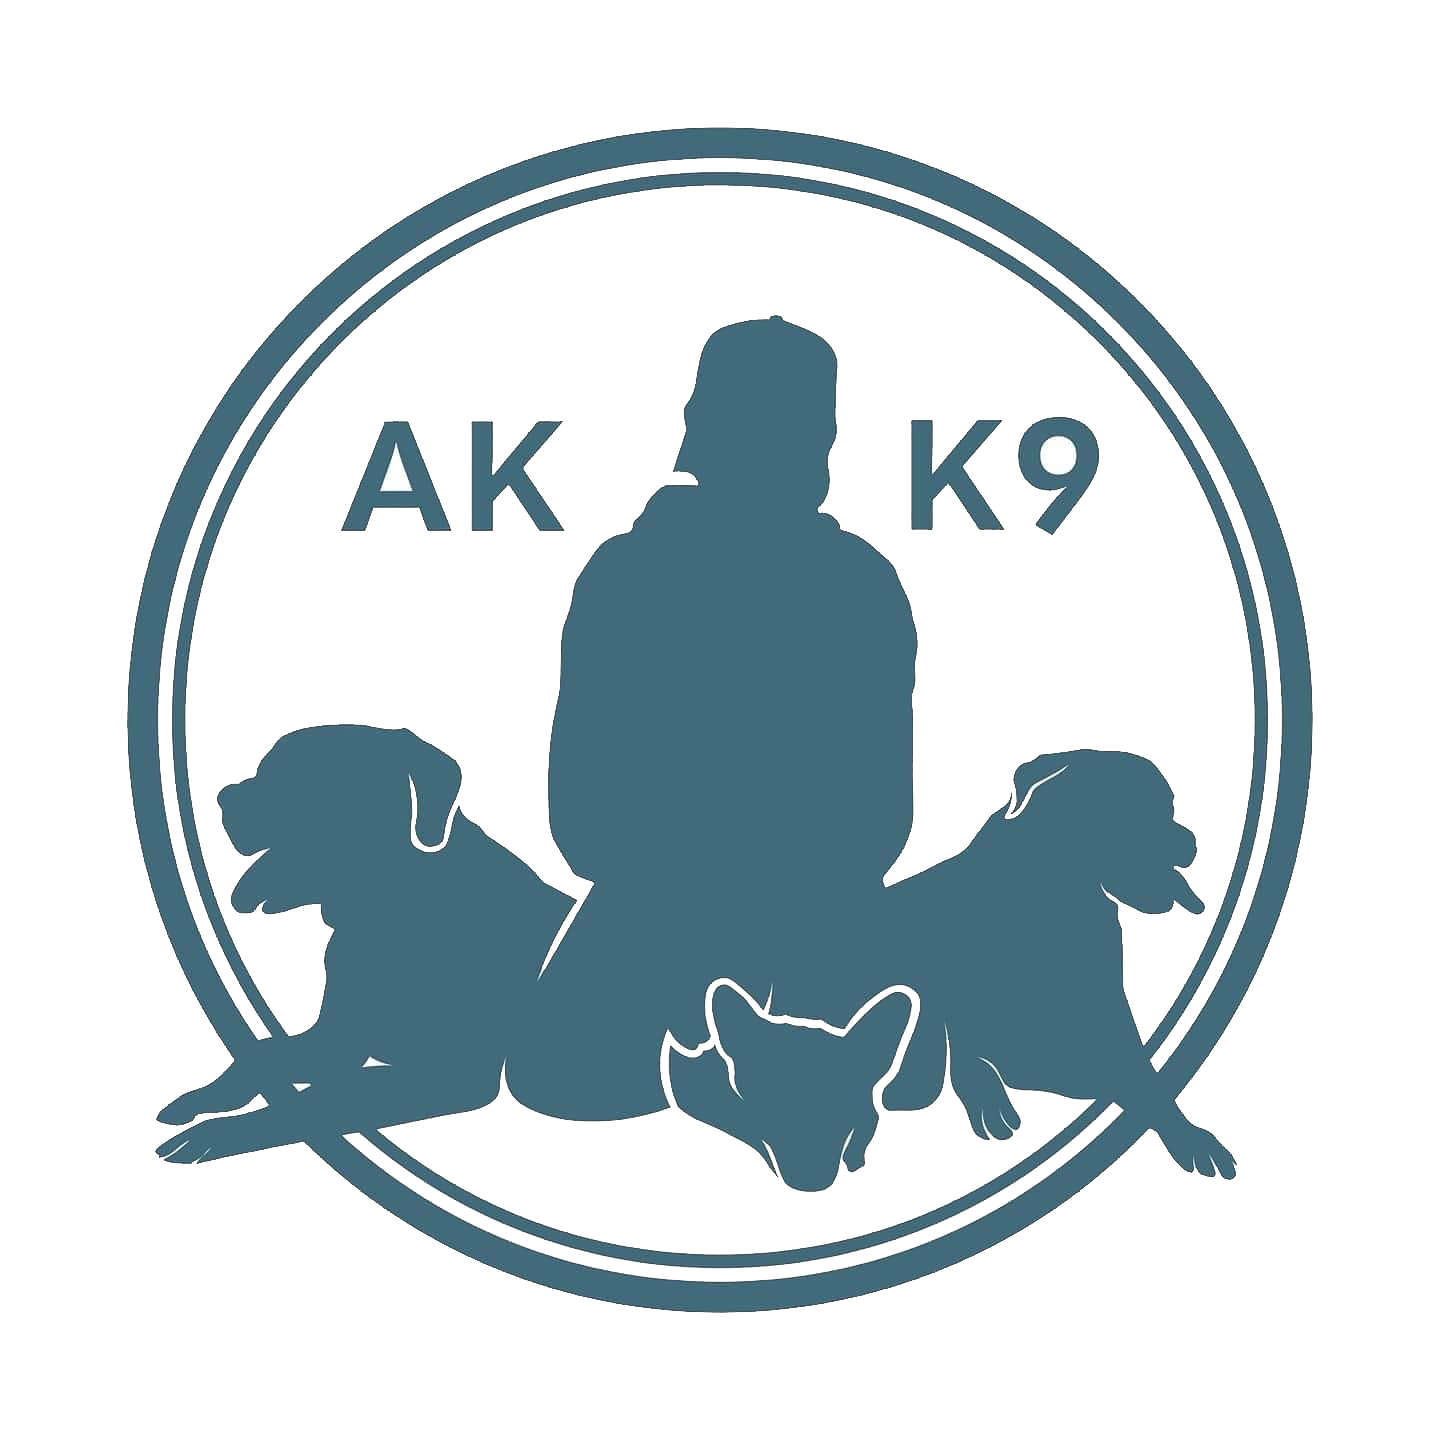 AKK9 Dog Training